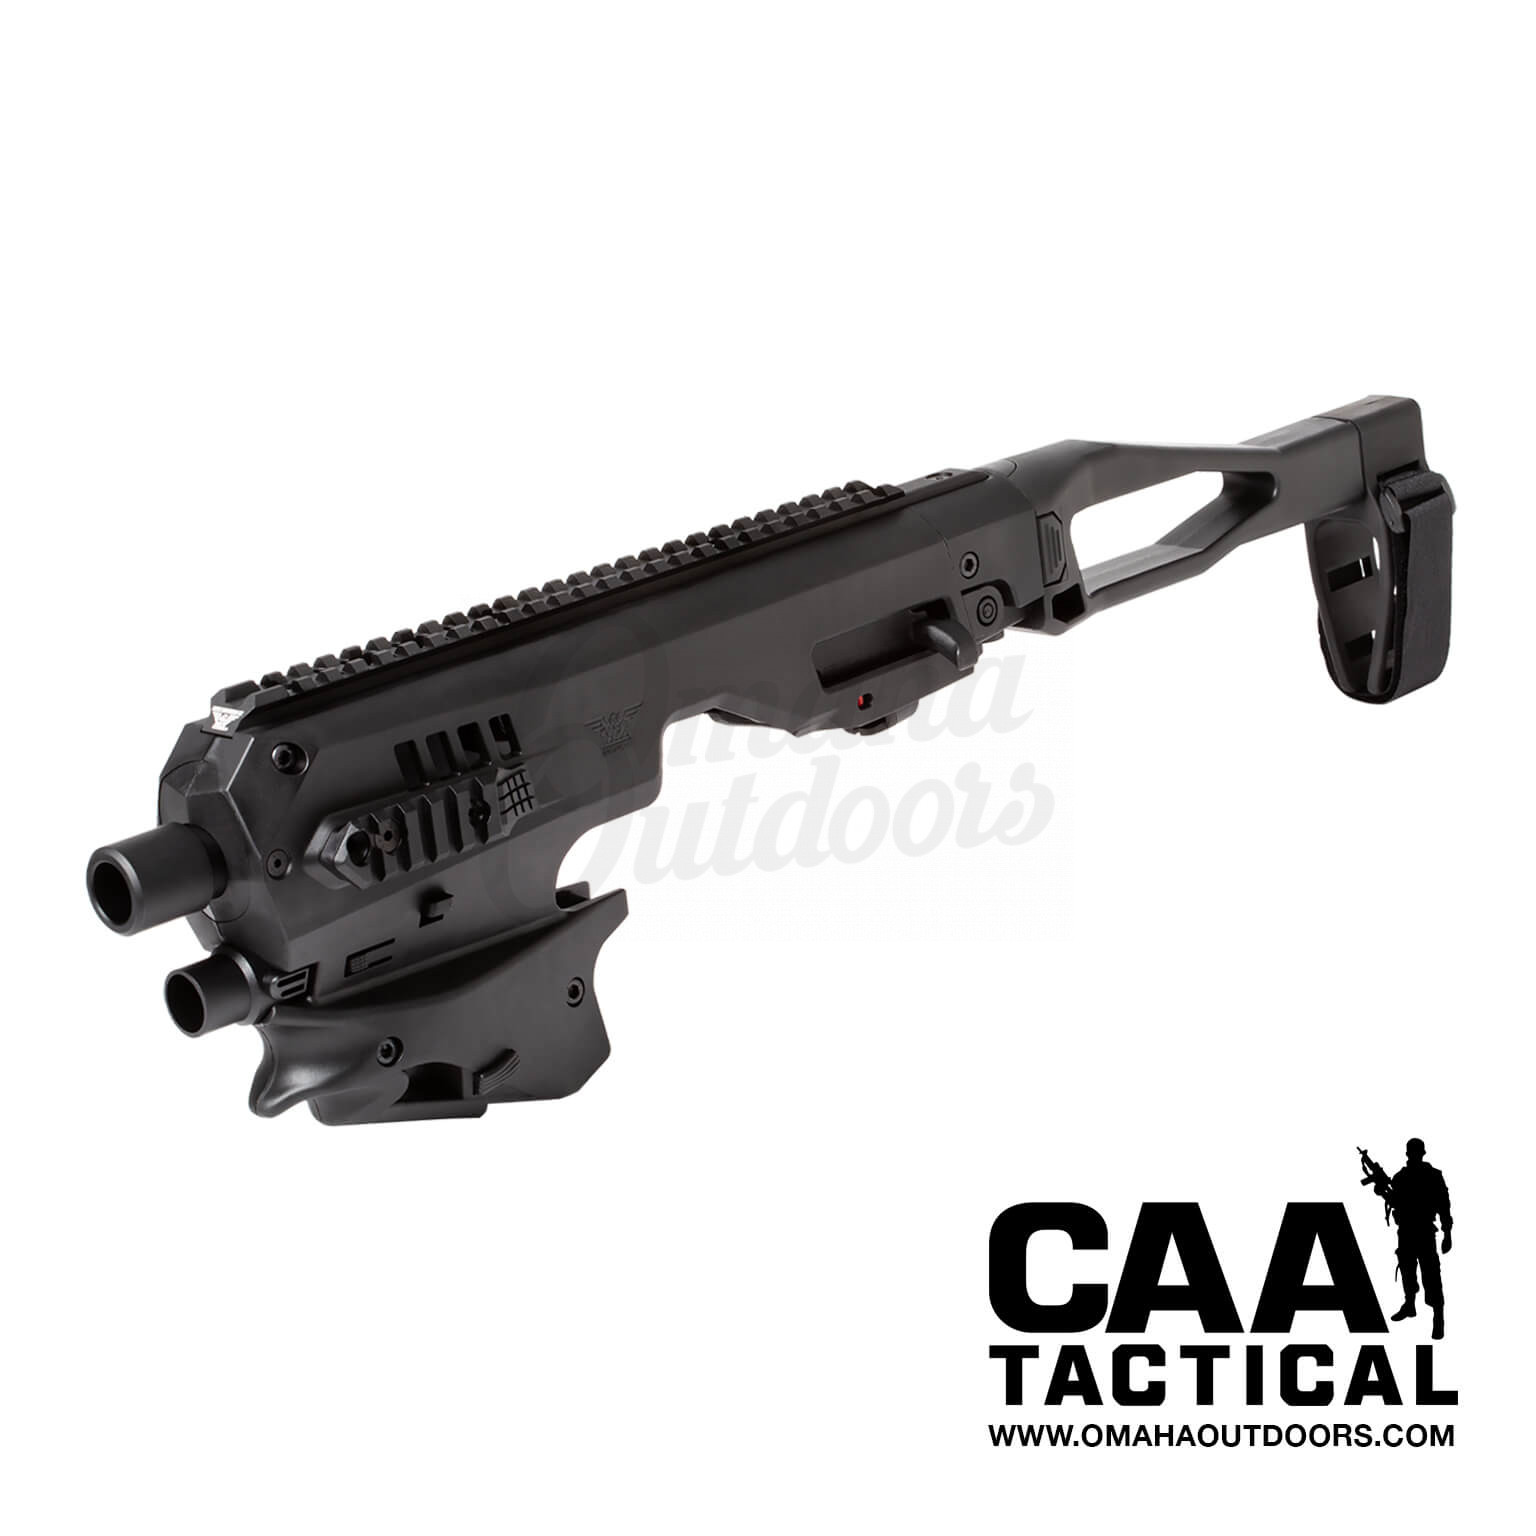 CAA Micro Roni Glock 17/19 Brace Stabilizer Conversion Kit